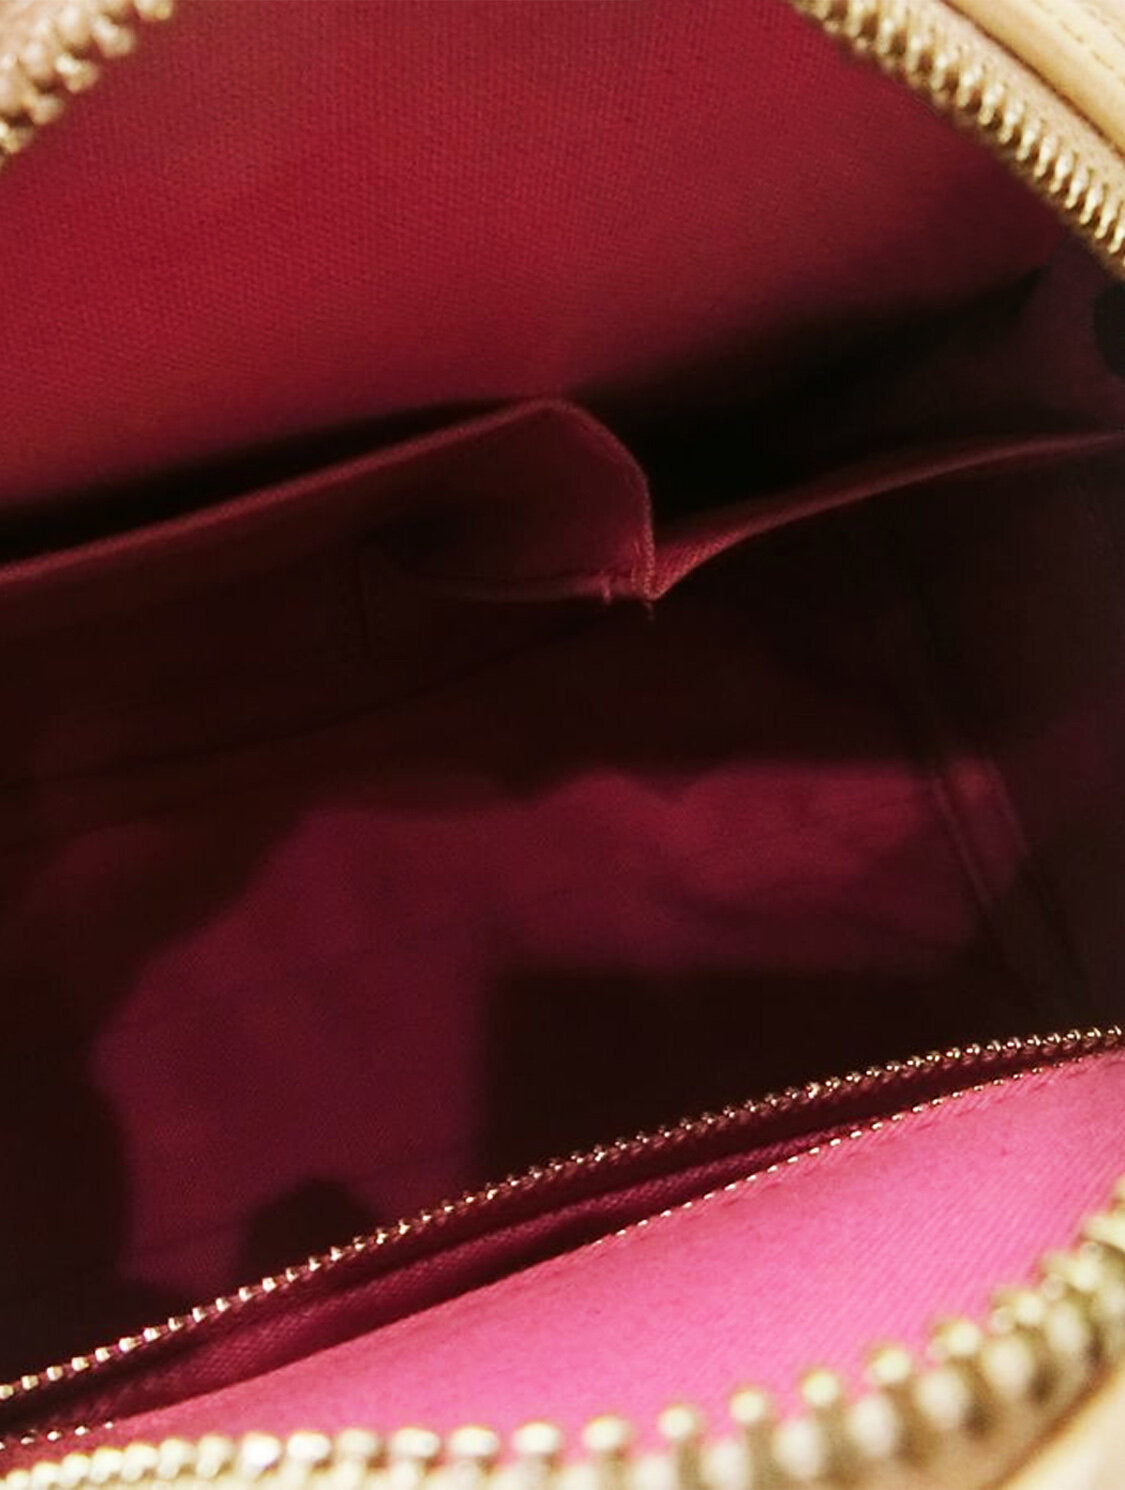 Burberry London blue label pink plaid handbag